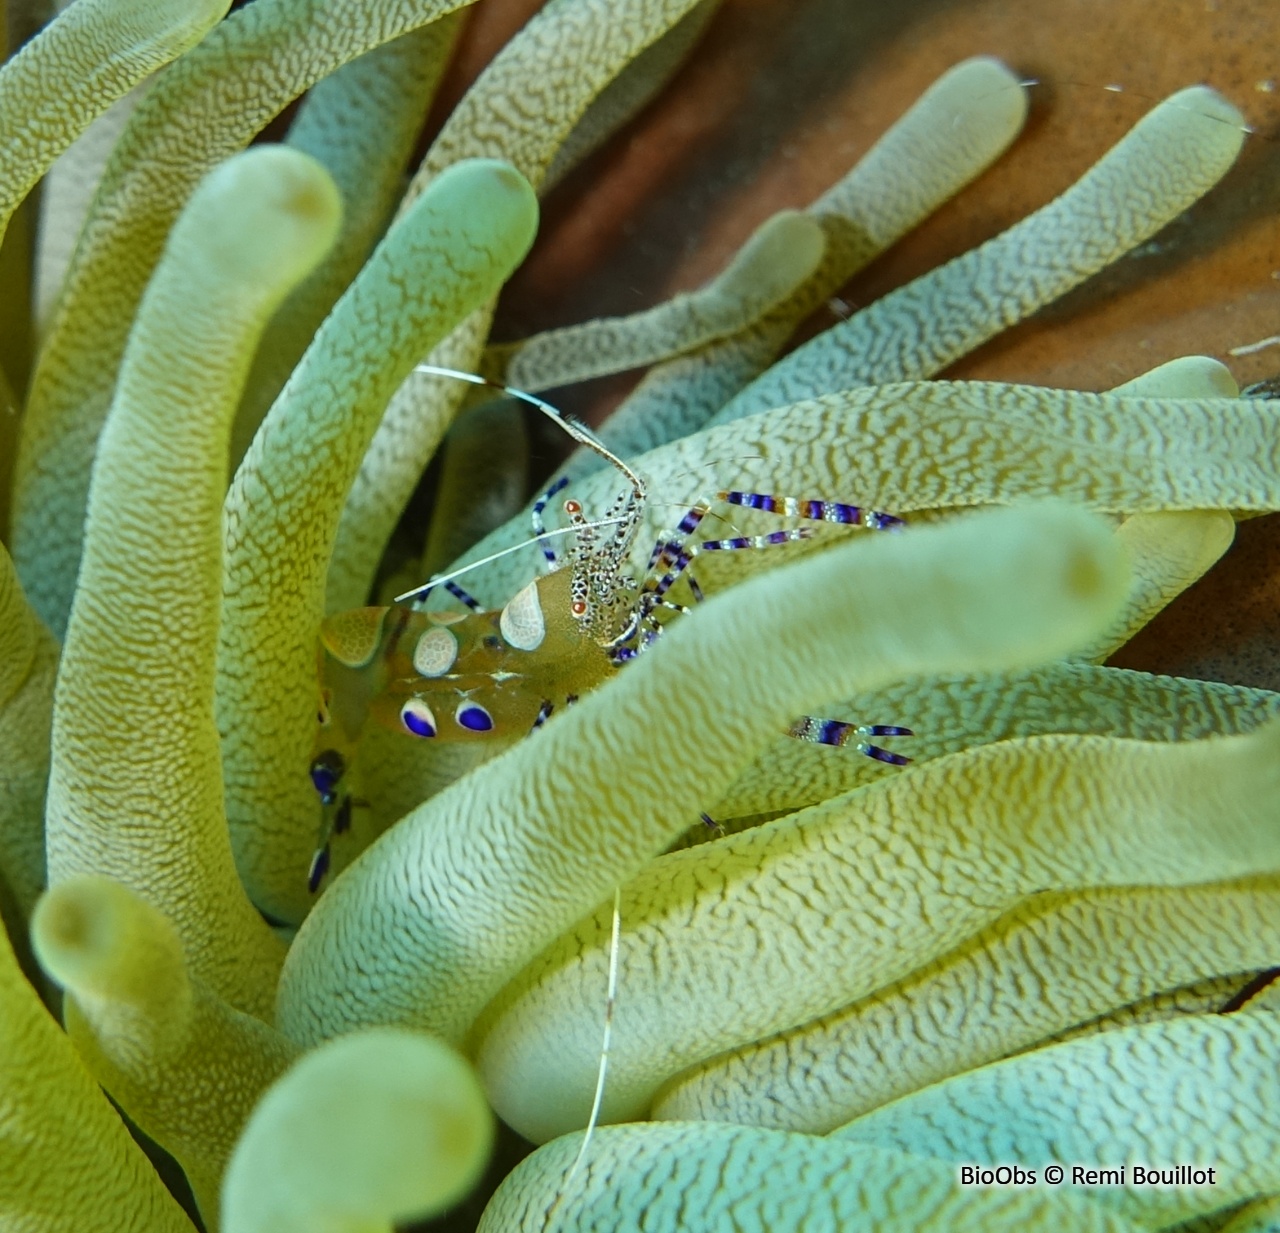 Crevette du Yucatan - Periclimenes yucatanicus - Remi Bouillot - BioObs